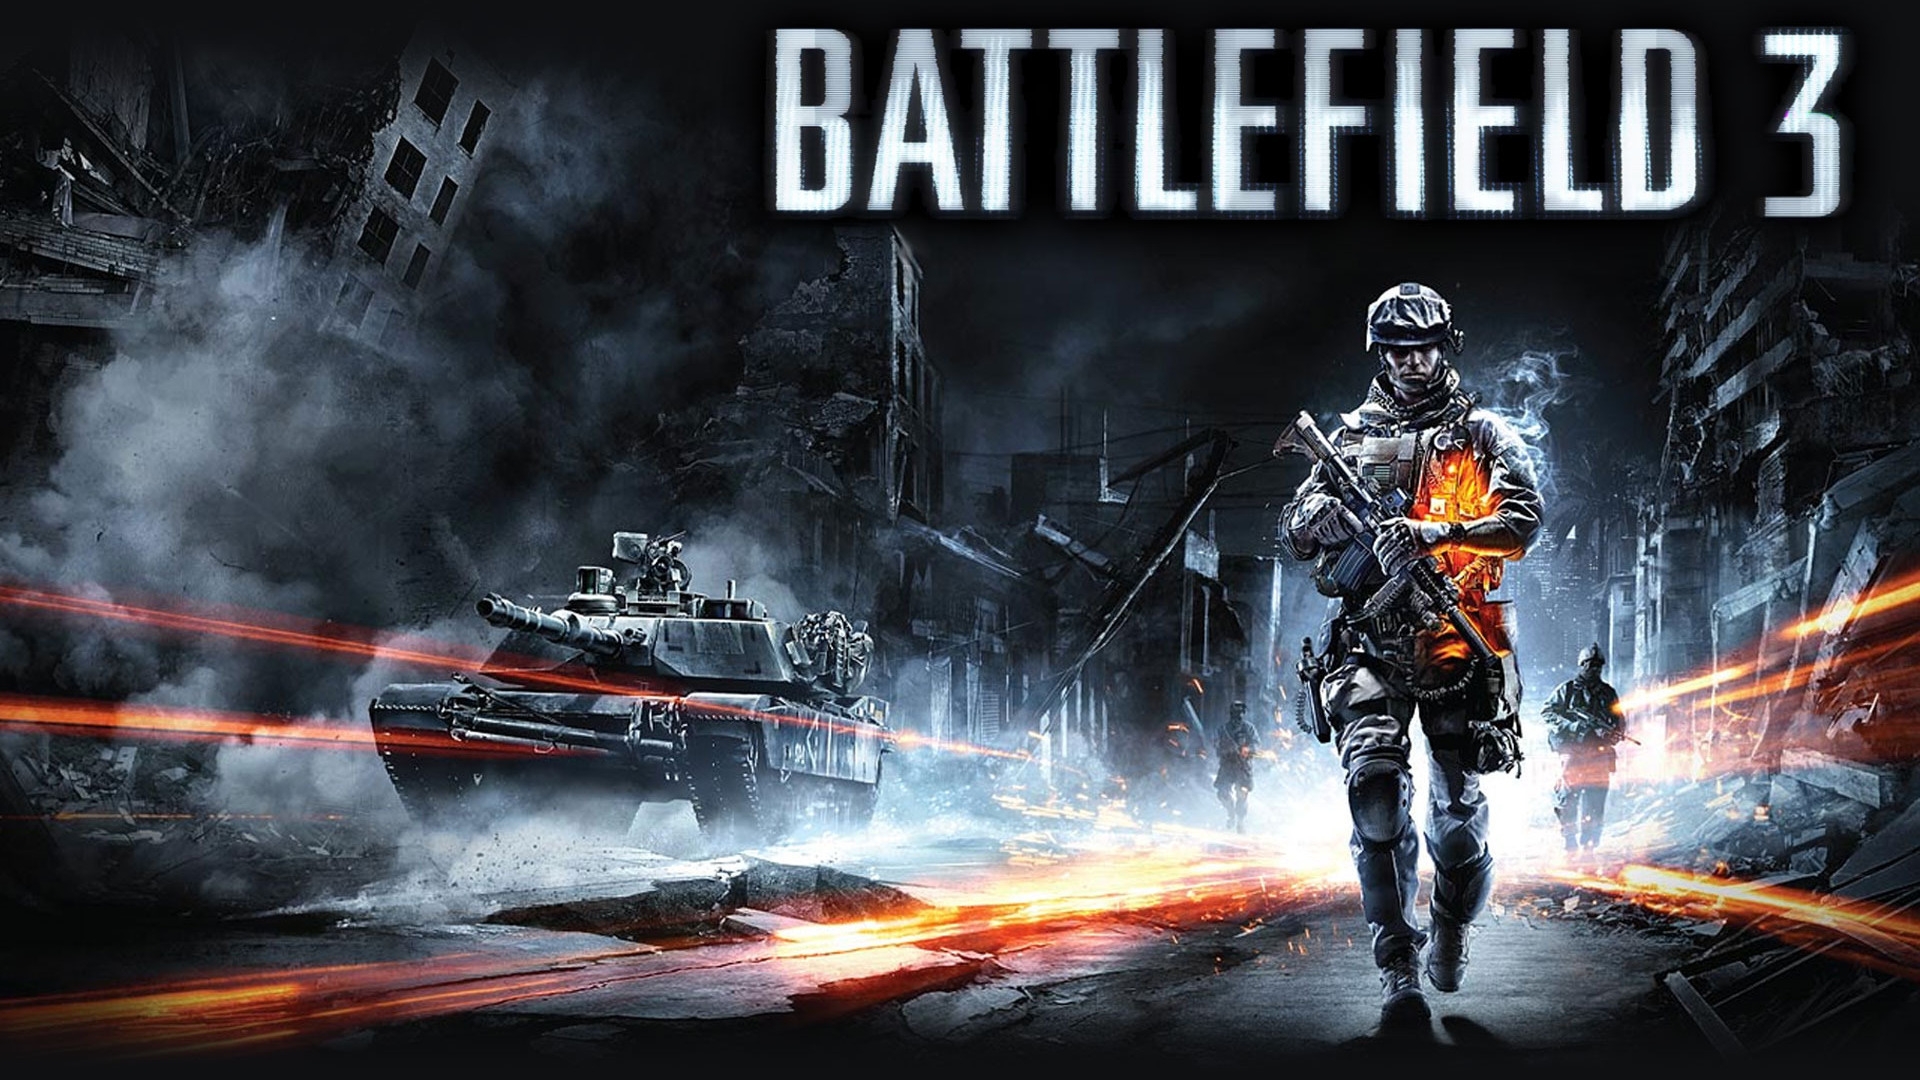 Battlefield 3 for 1920 x 1080 HDTV 1080p resolution